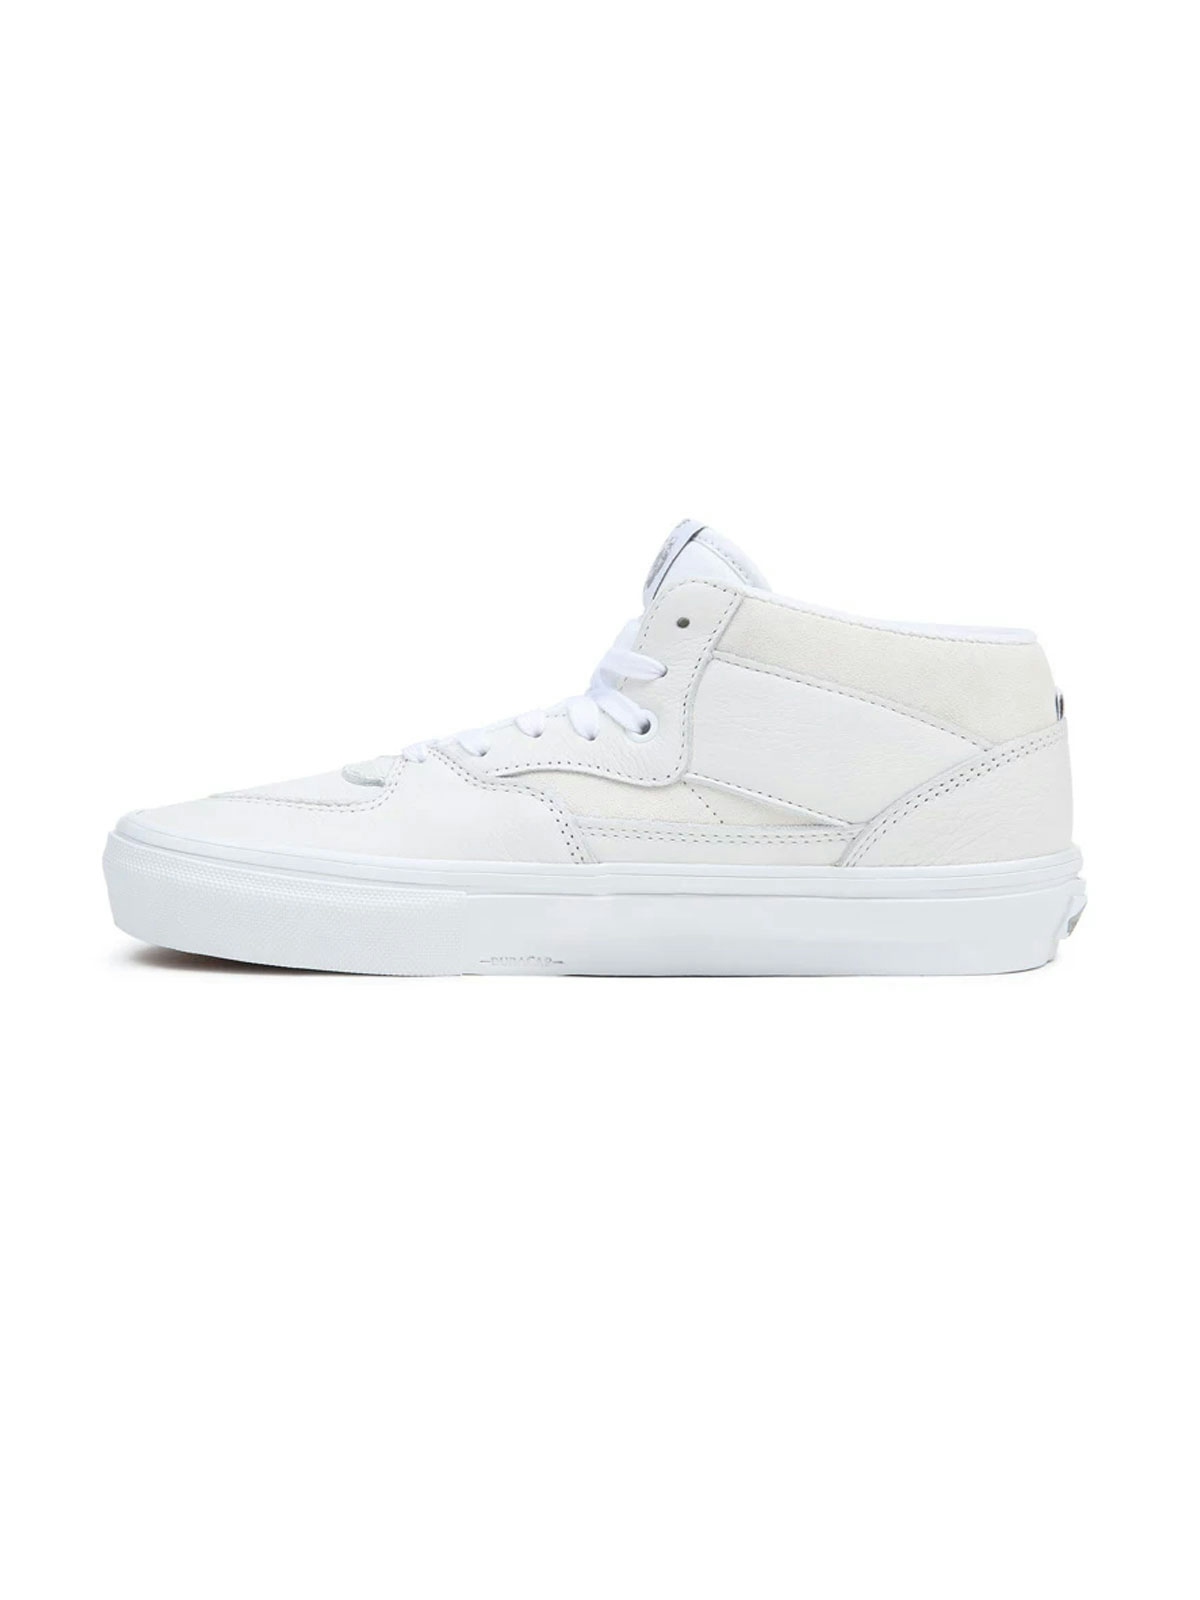 Vans Daz Skate Half Cab Shoes White/White 2